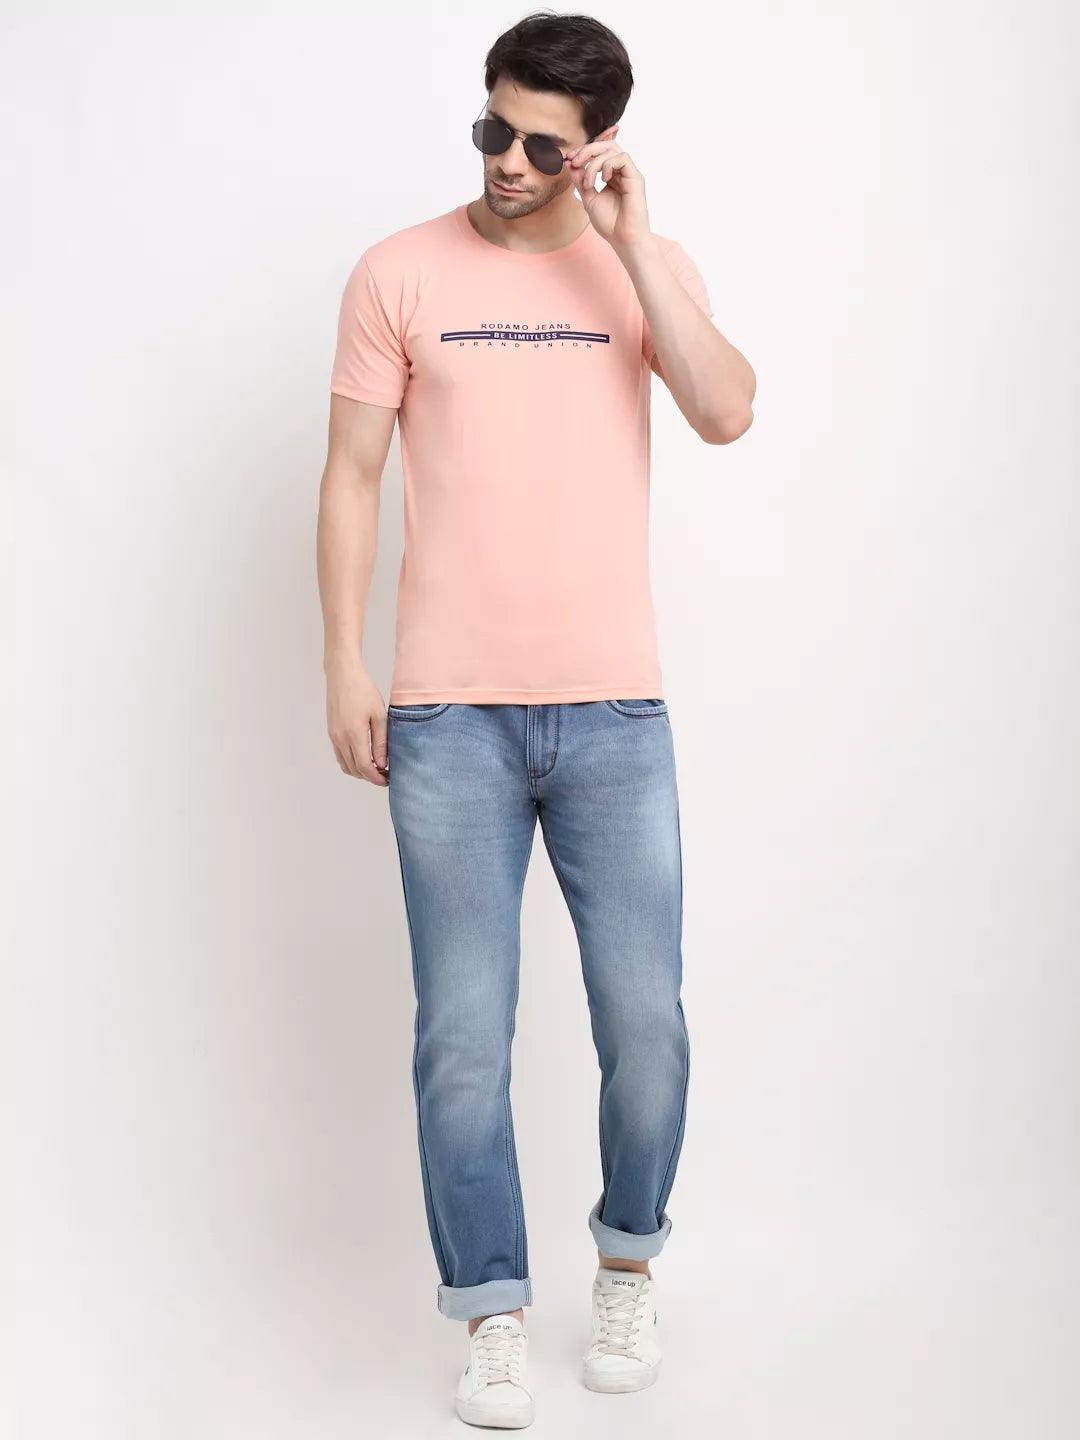 Rodamo Cotton Printed T-Shirt T-Shirt (Large) - ShopIMO